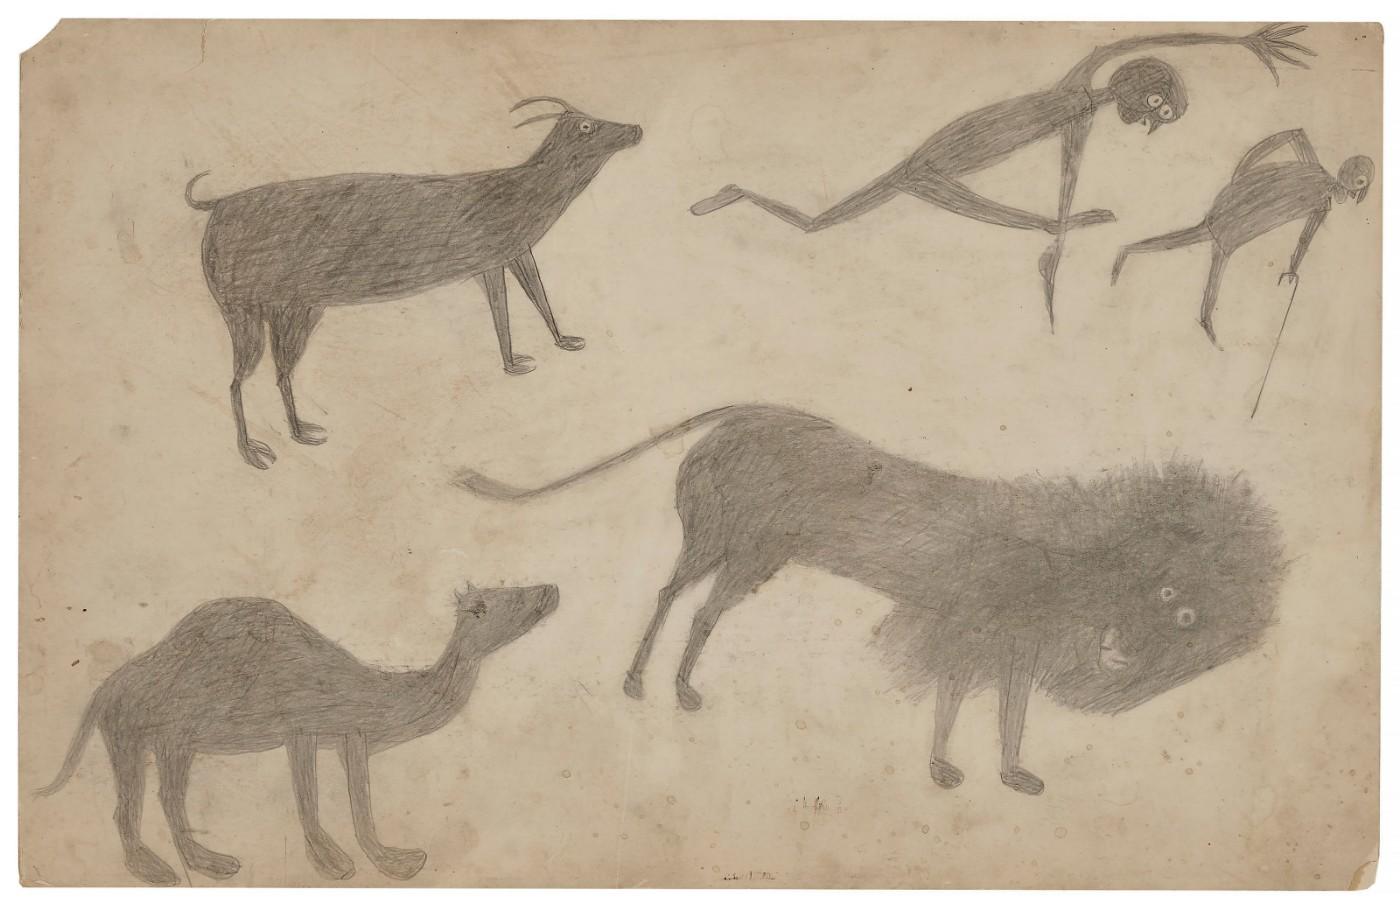 Bill Traylor (circa 1853-1949), Goat, Camel, Lion and Figures, circa 1939